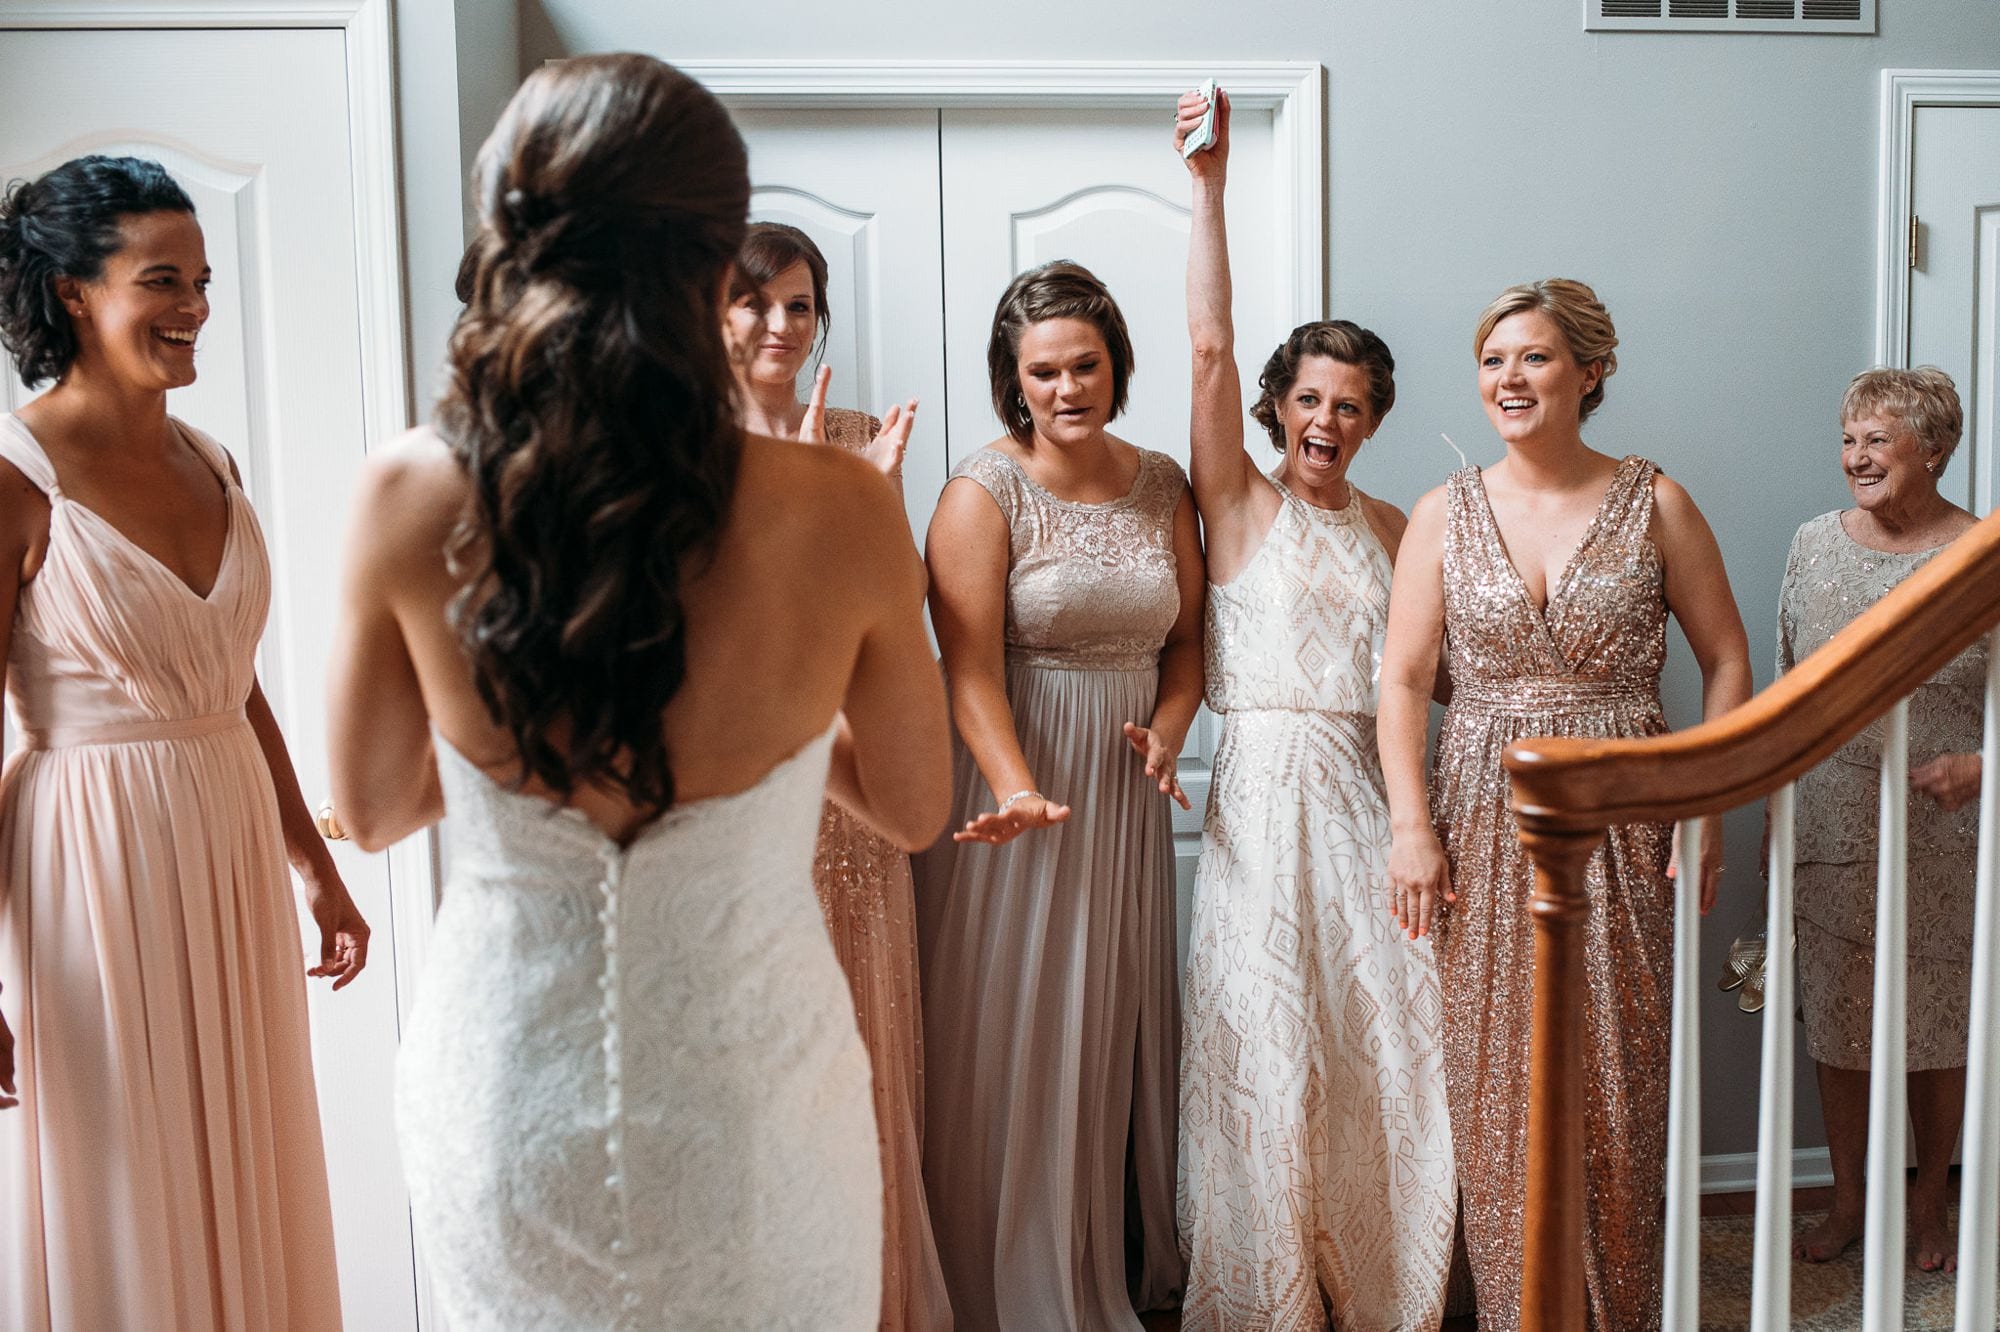 bridesmaids reacting to seeing bride in wedding dress